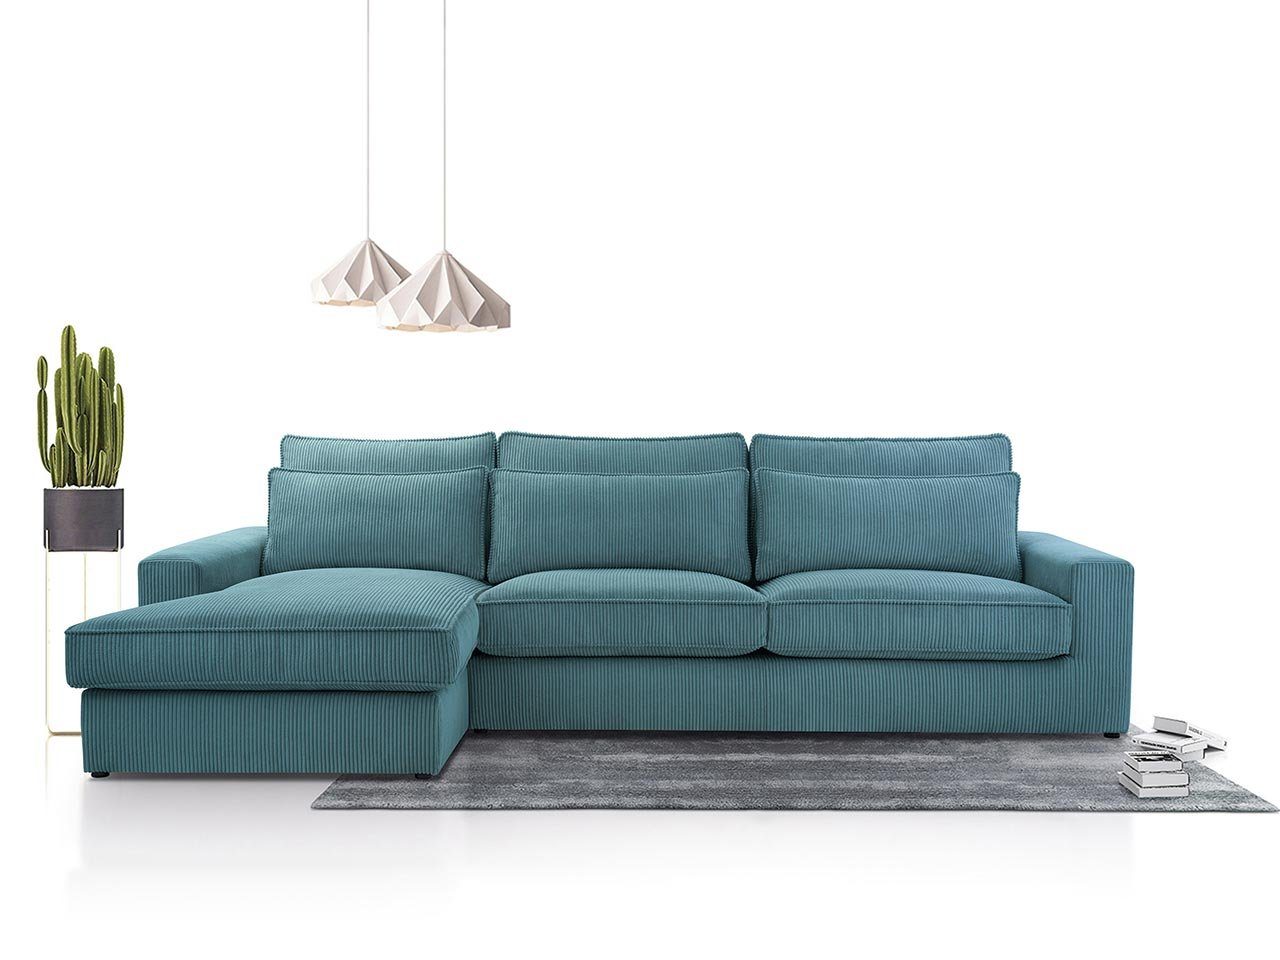 MKS MÖBEL Ecksofa CANES, L - Form Couch, mit lose Kissen, modern Ecksofa Blau Lincoln